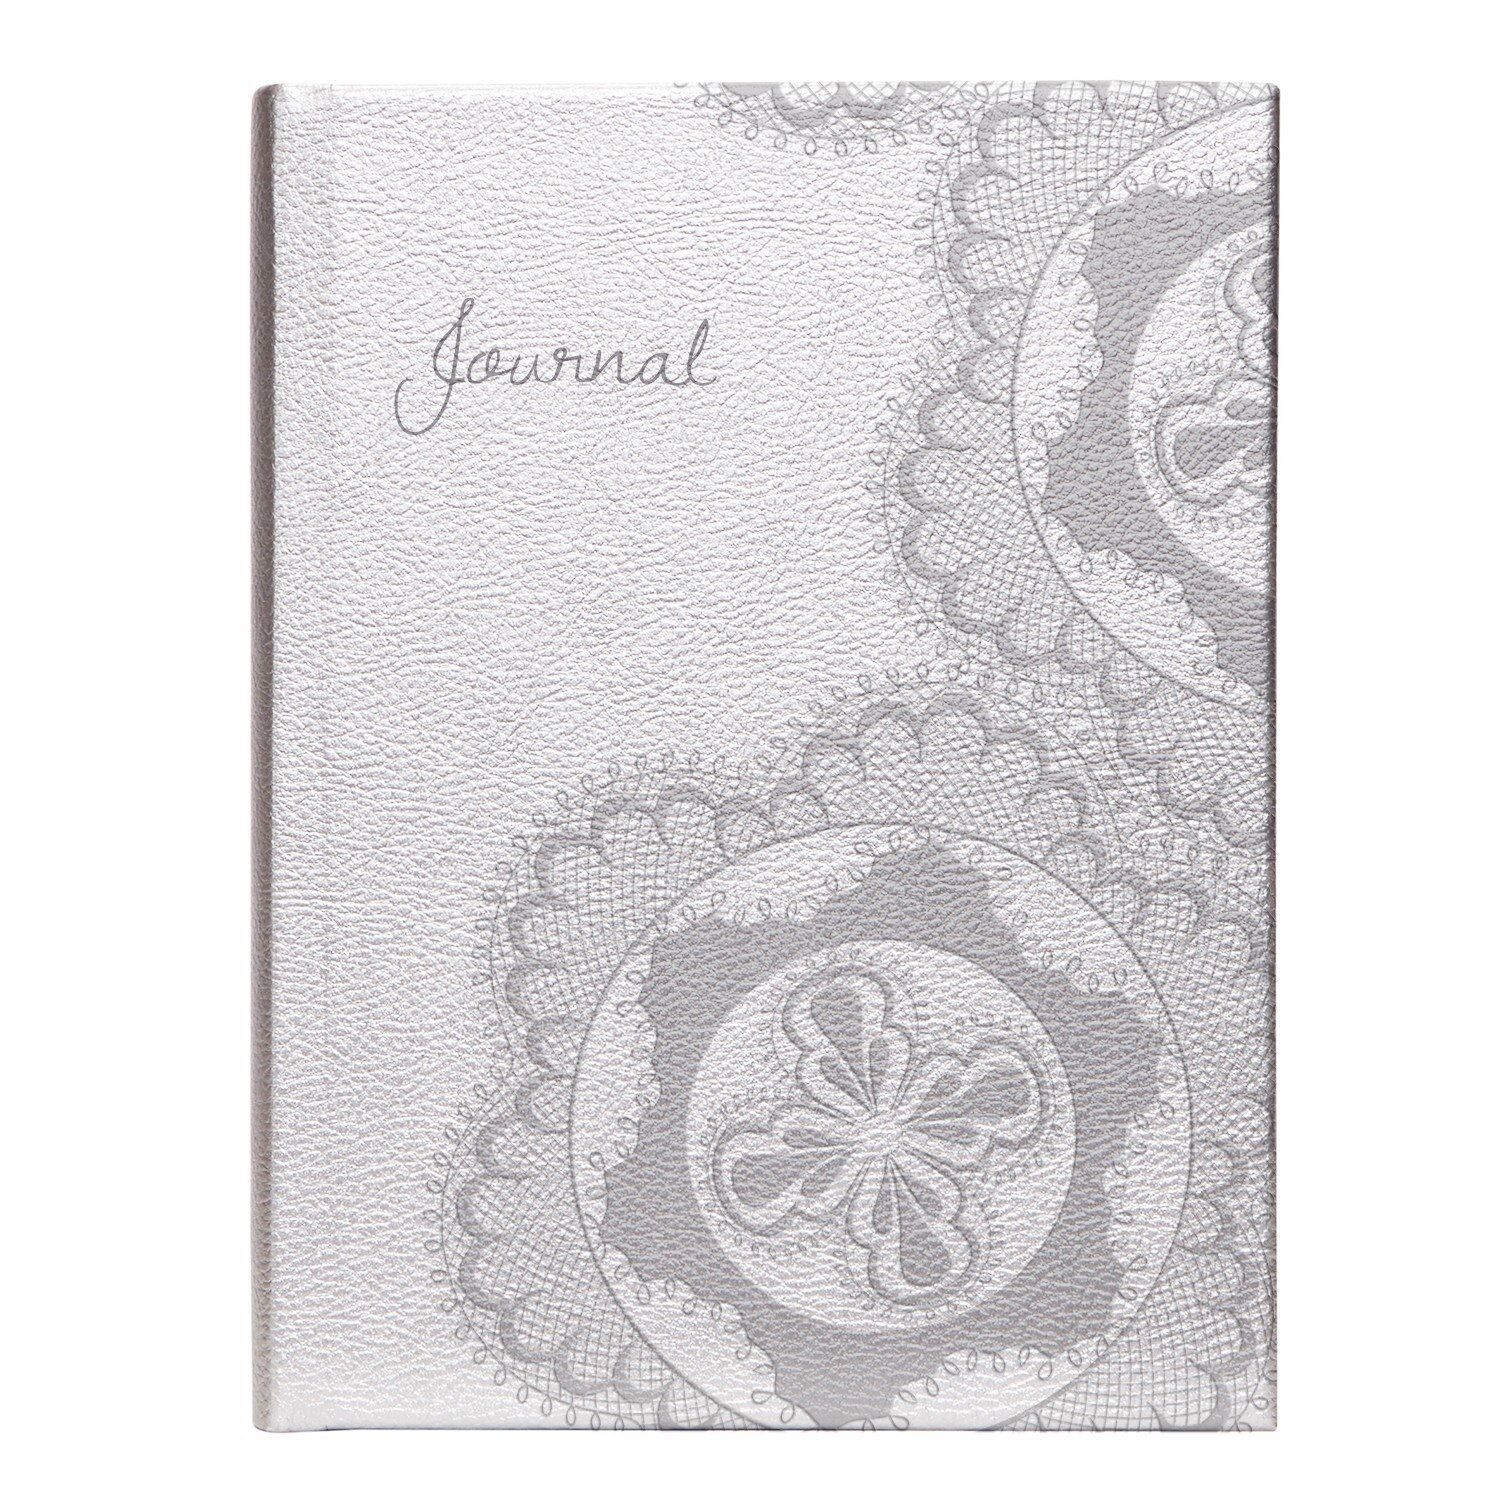 alt="Silver Regalia bound personal journal"